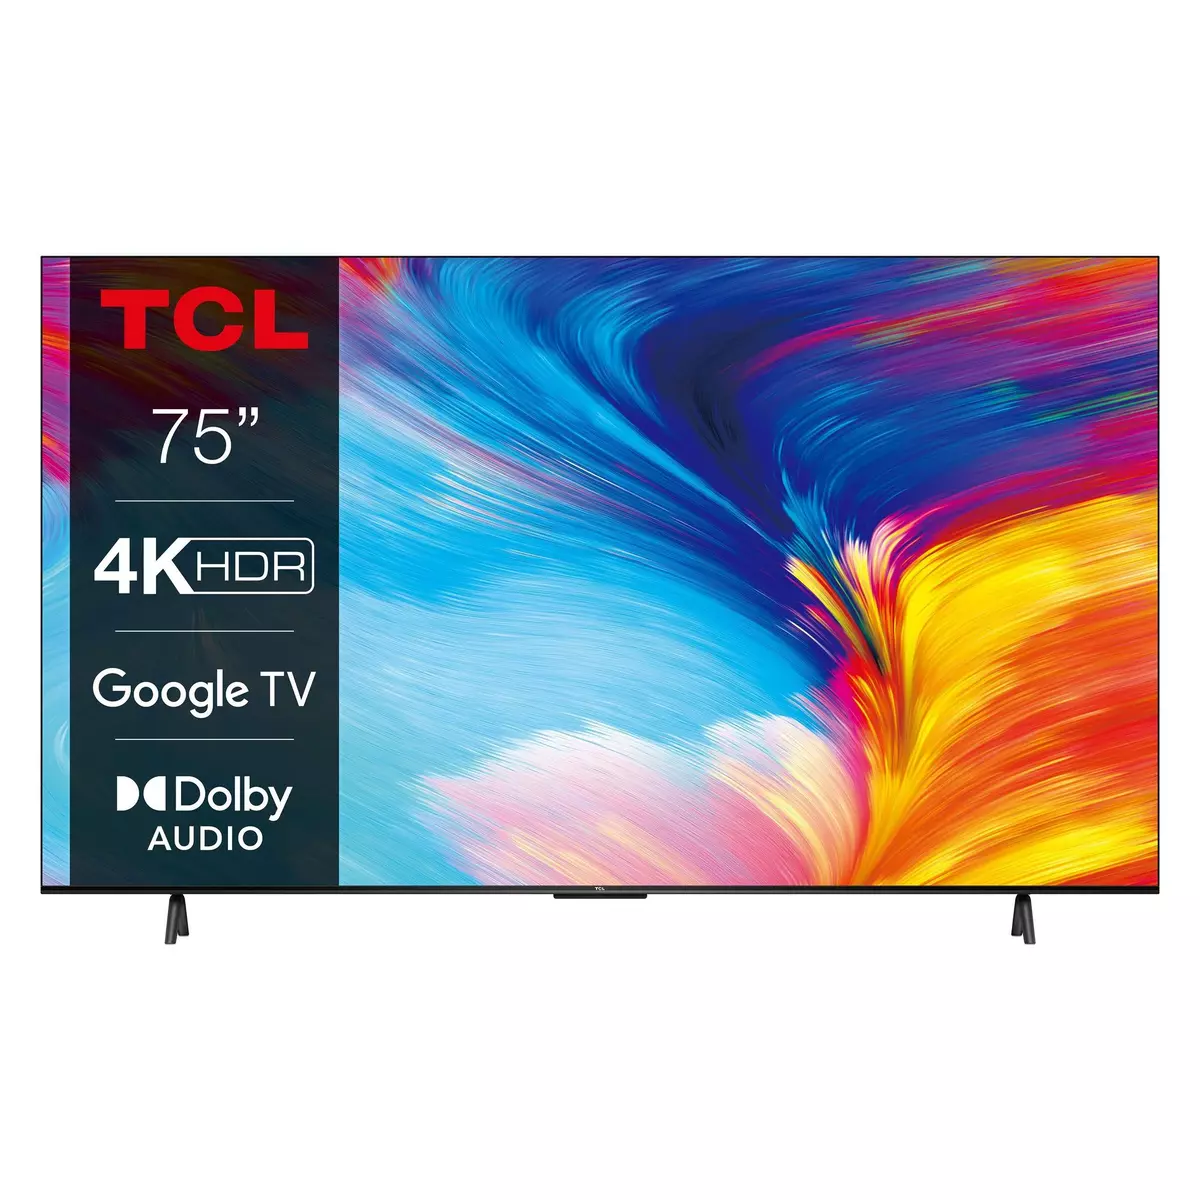 TCL 75P635 TV 4K HDR 189 cm Google TV